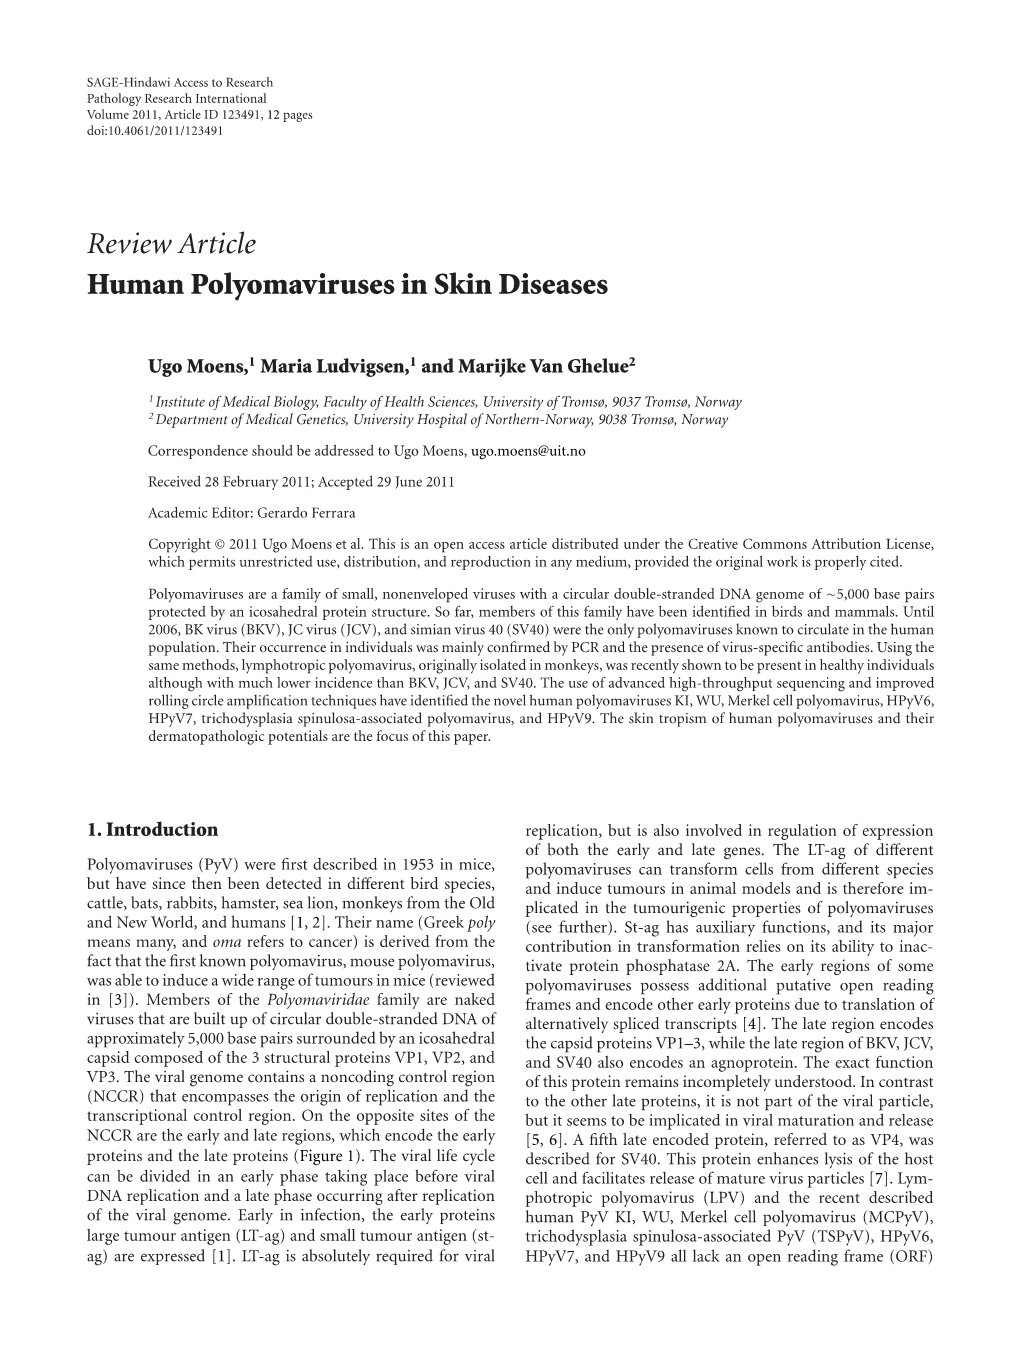 Review Article Human Polyomaviruses in Skin Diseases